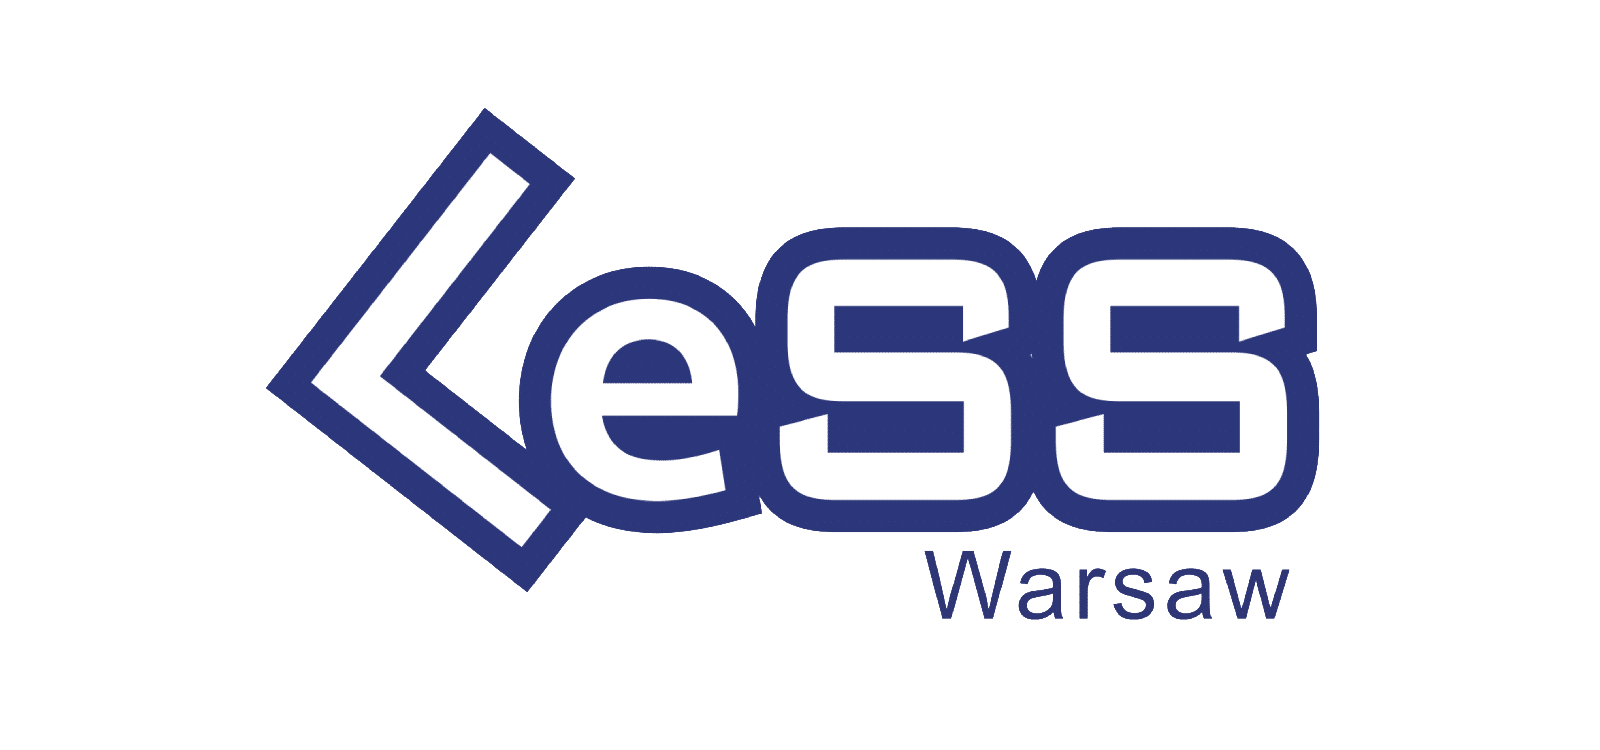 Less Warsaw logo